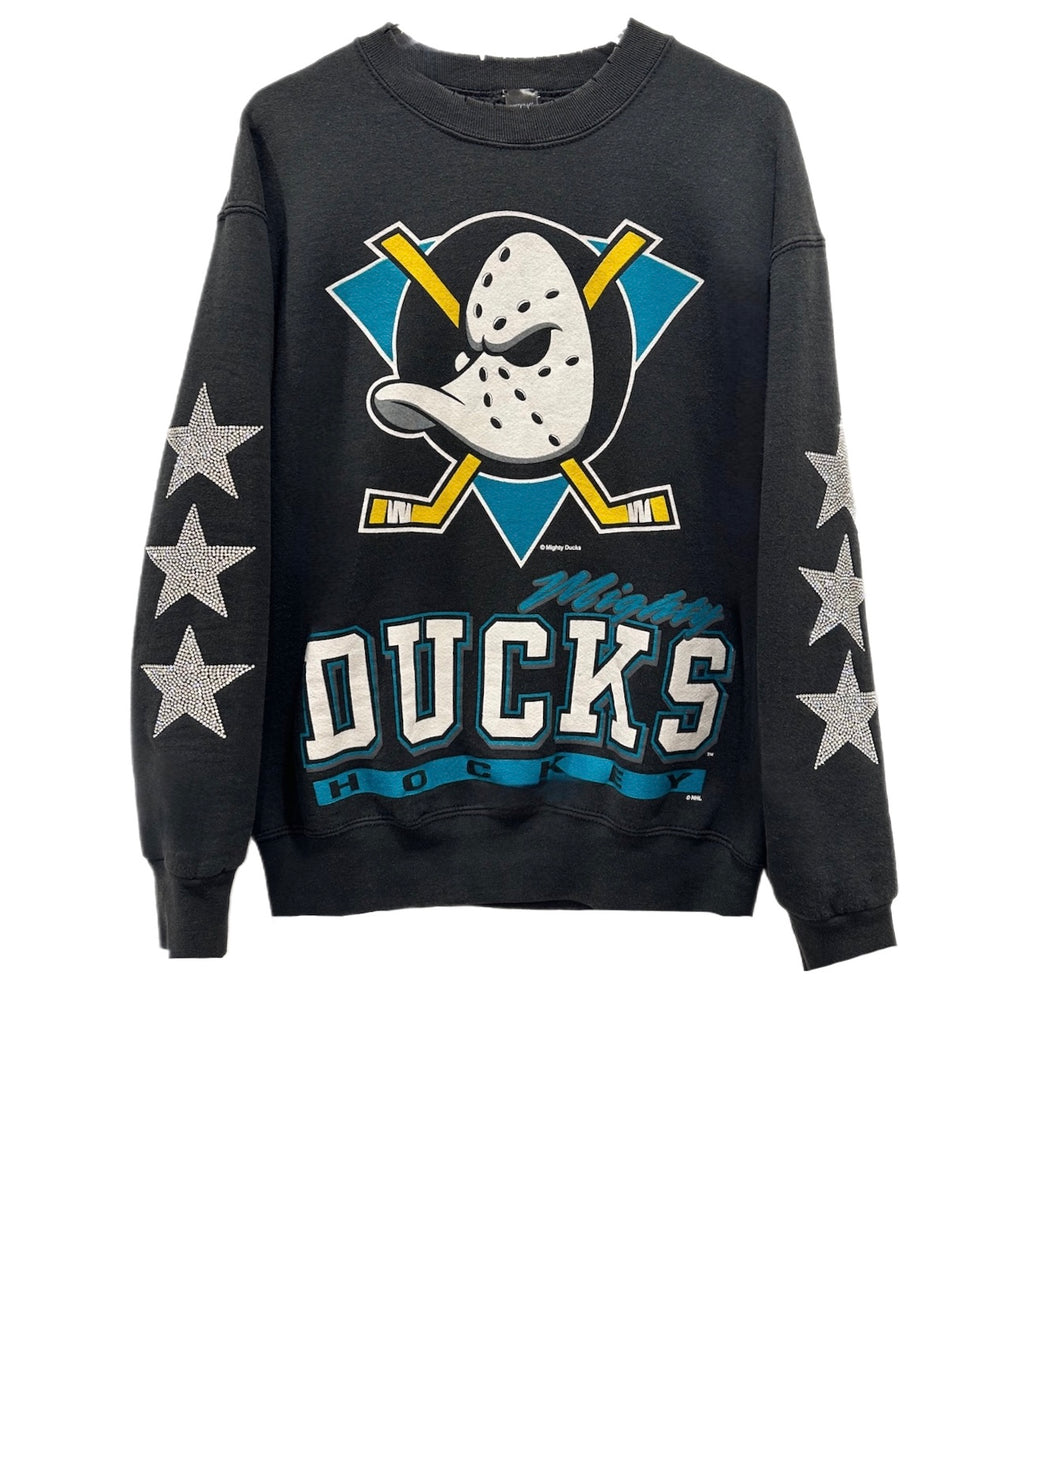 Anaheim Ducks, Hockey One of a KIND Vintage Sweatshirt with Three Crystal Star Design.